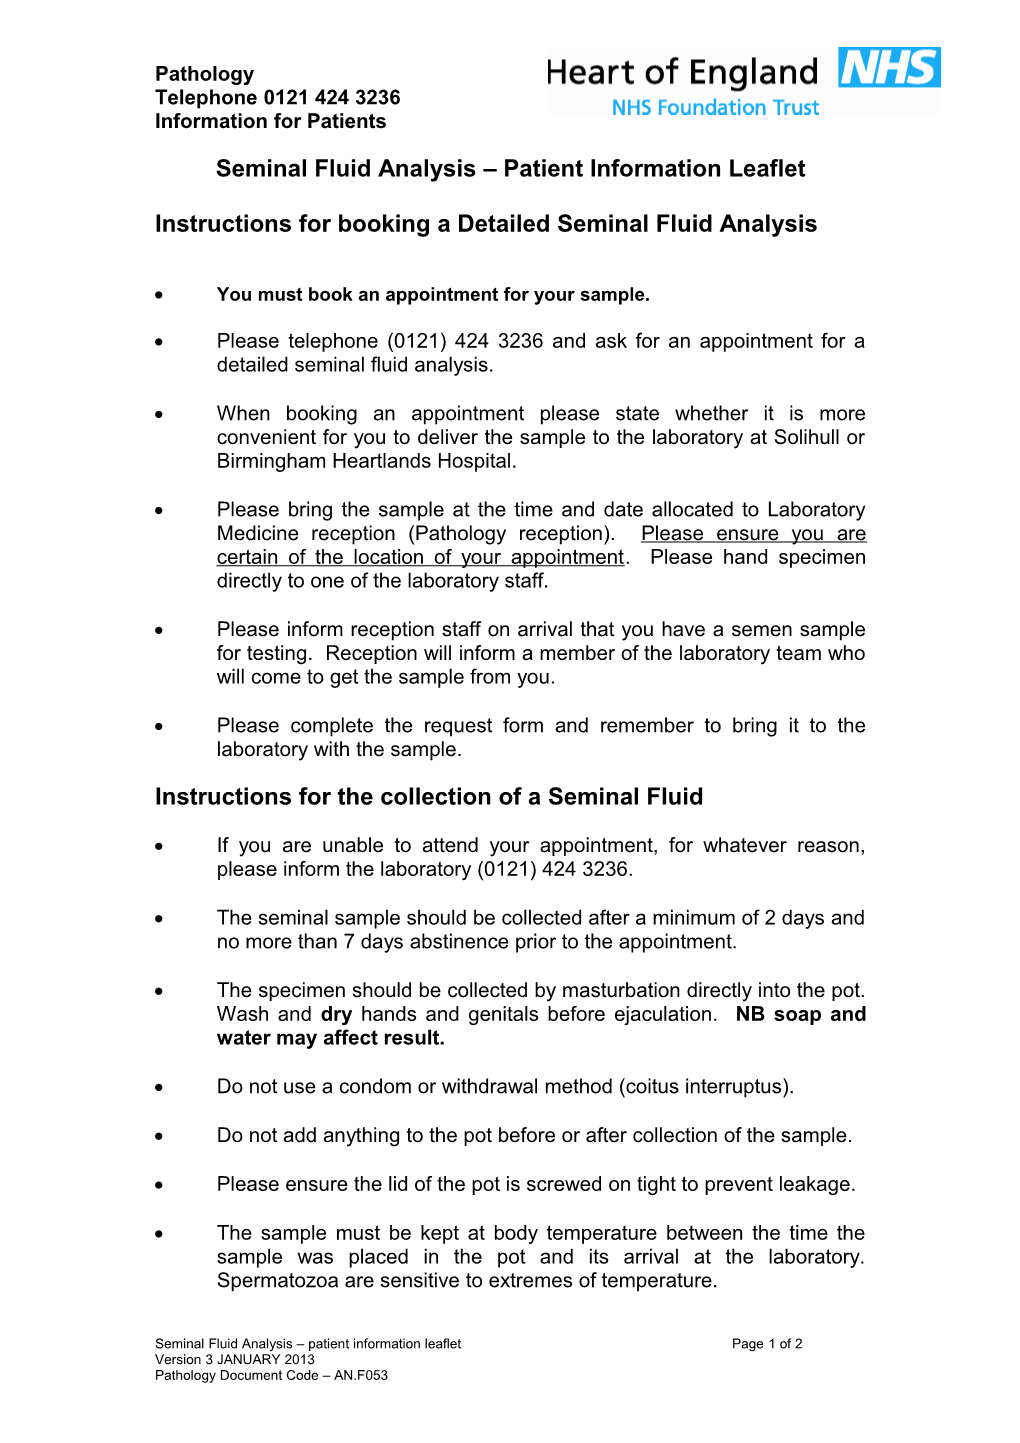 Seminal Fluid Analysis Patient Information Leaflet